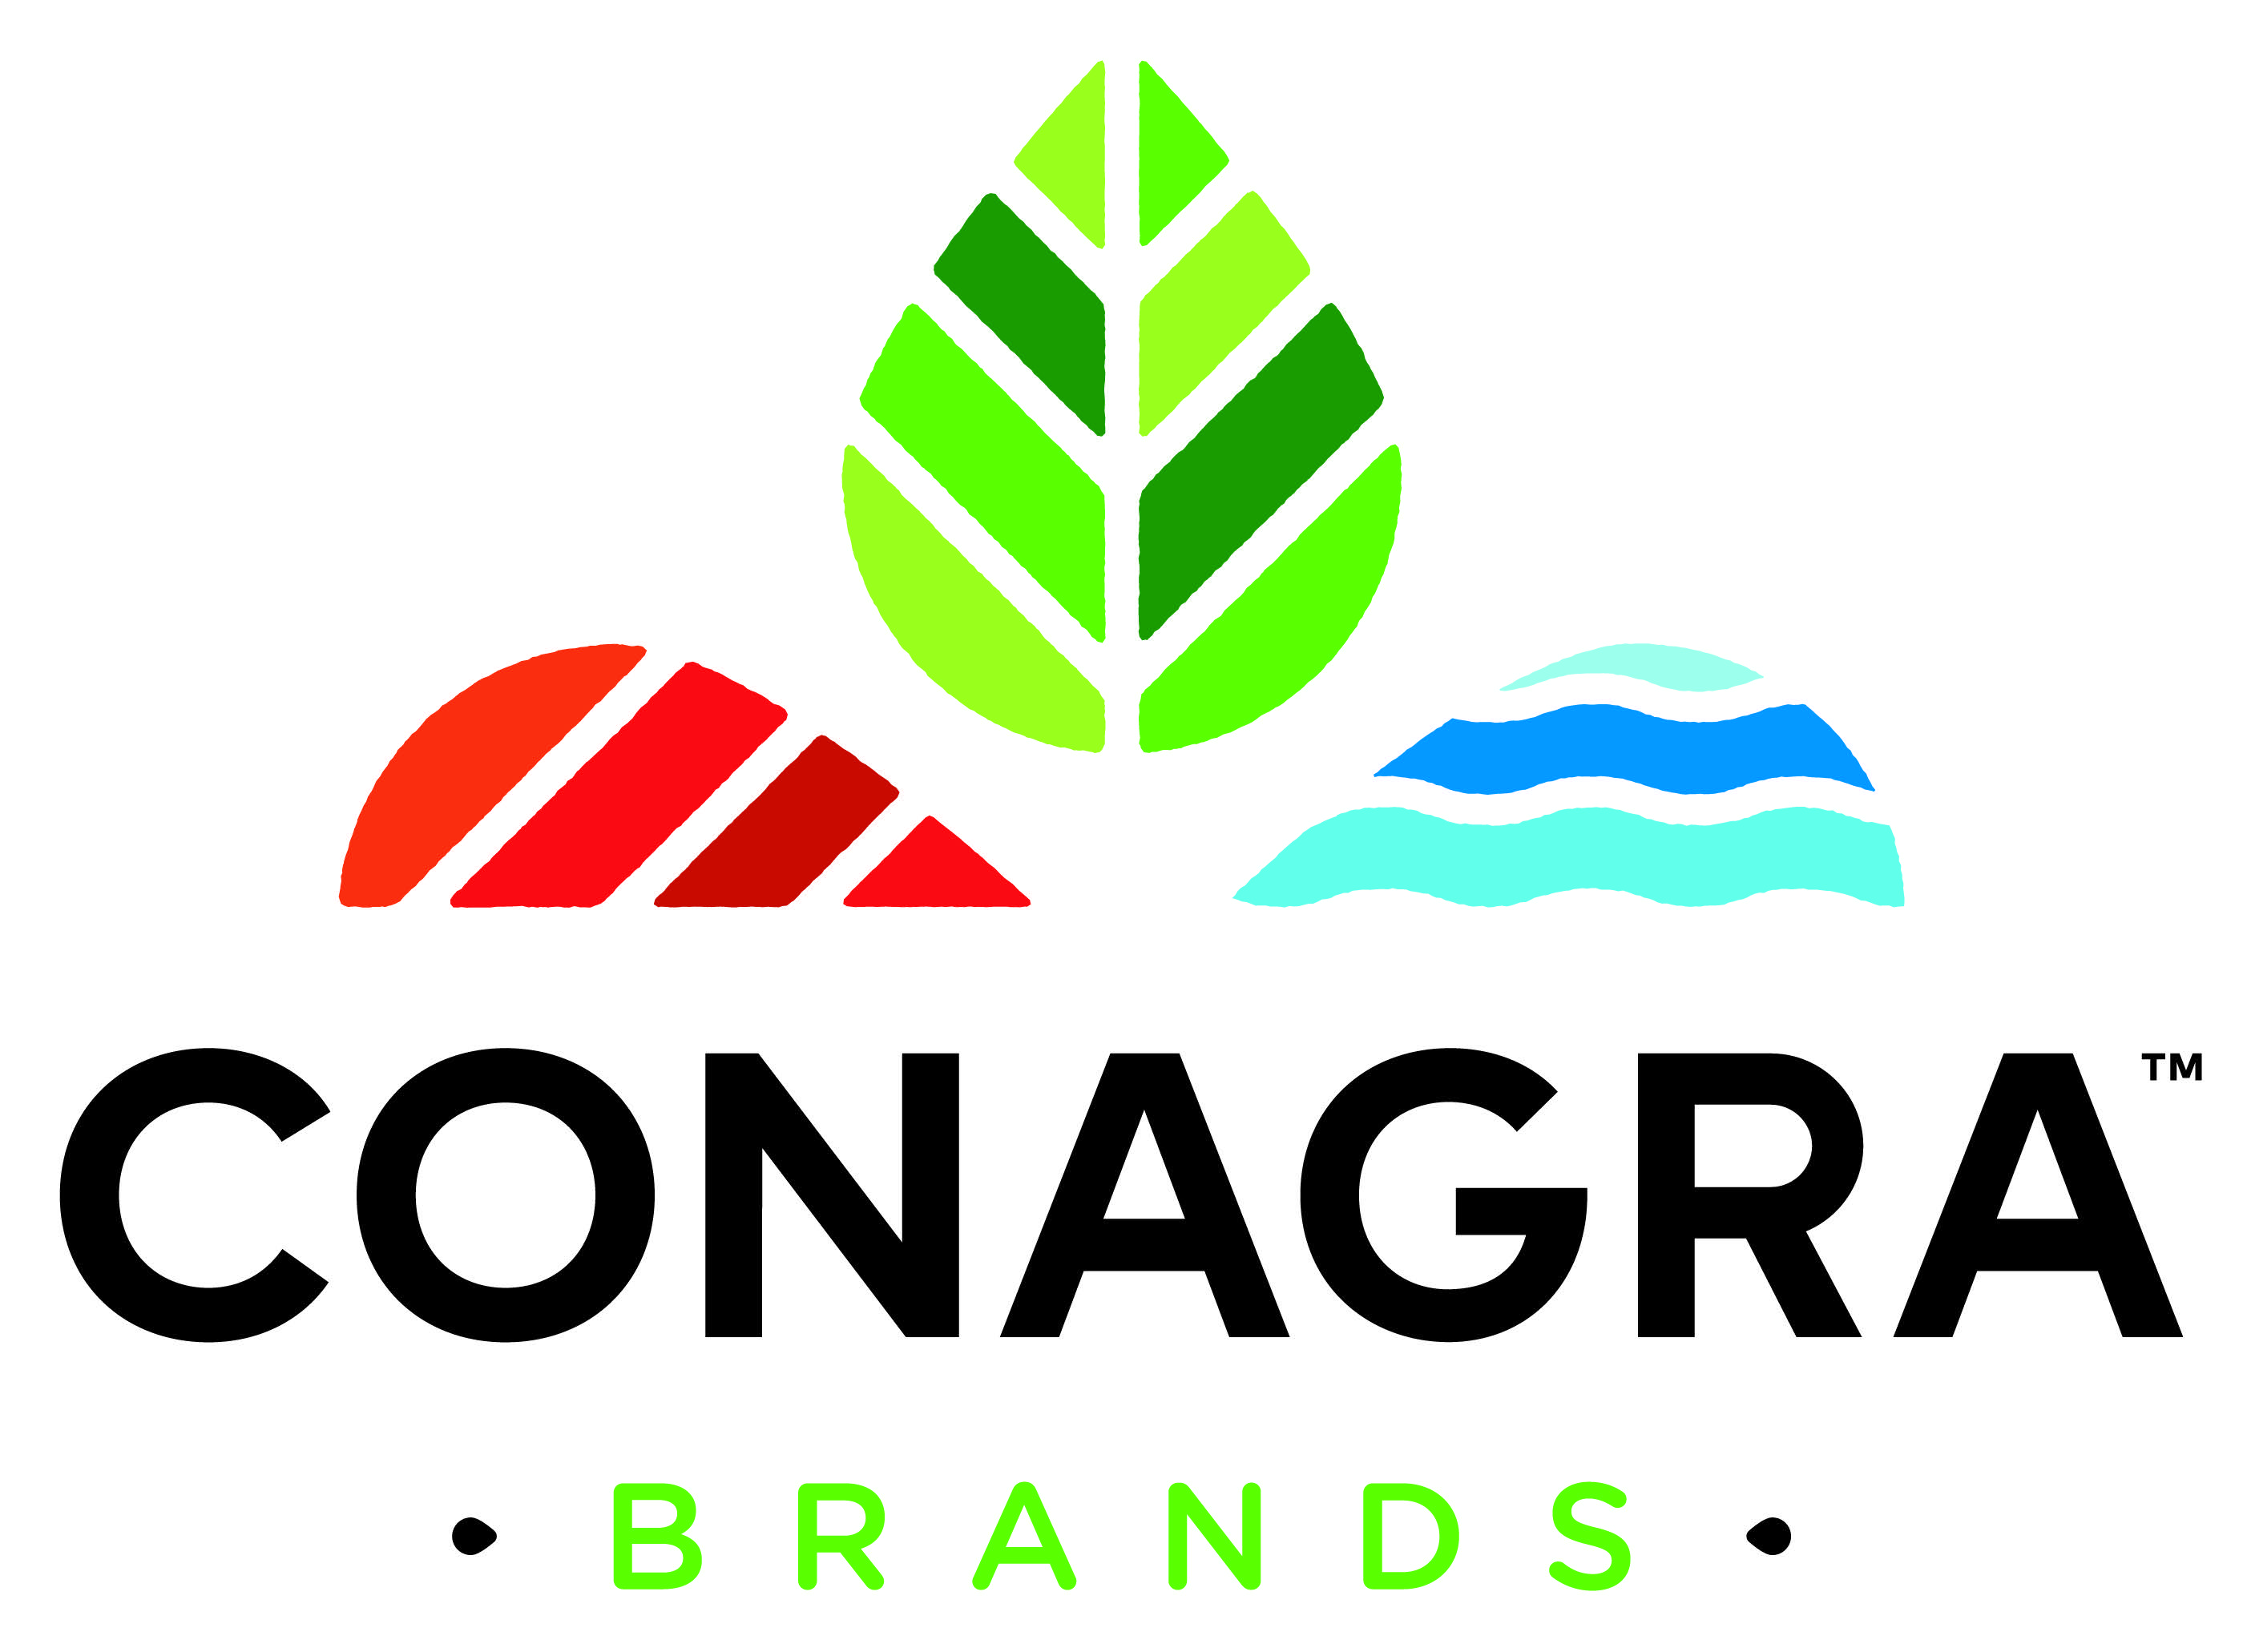 Conagra Brands